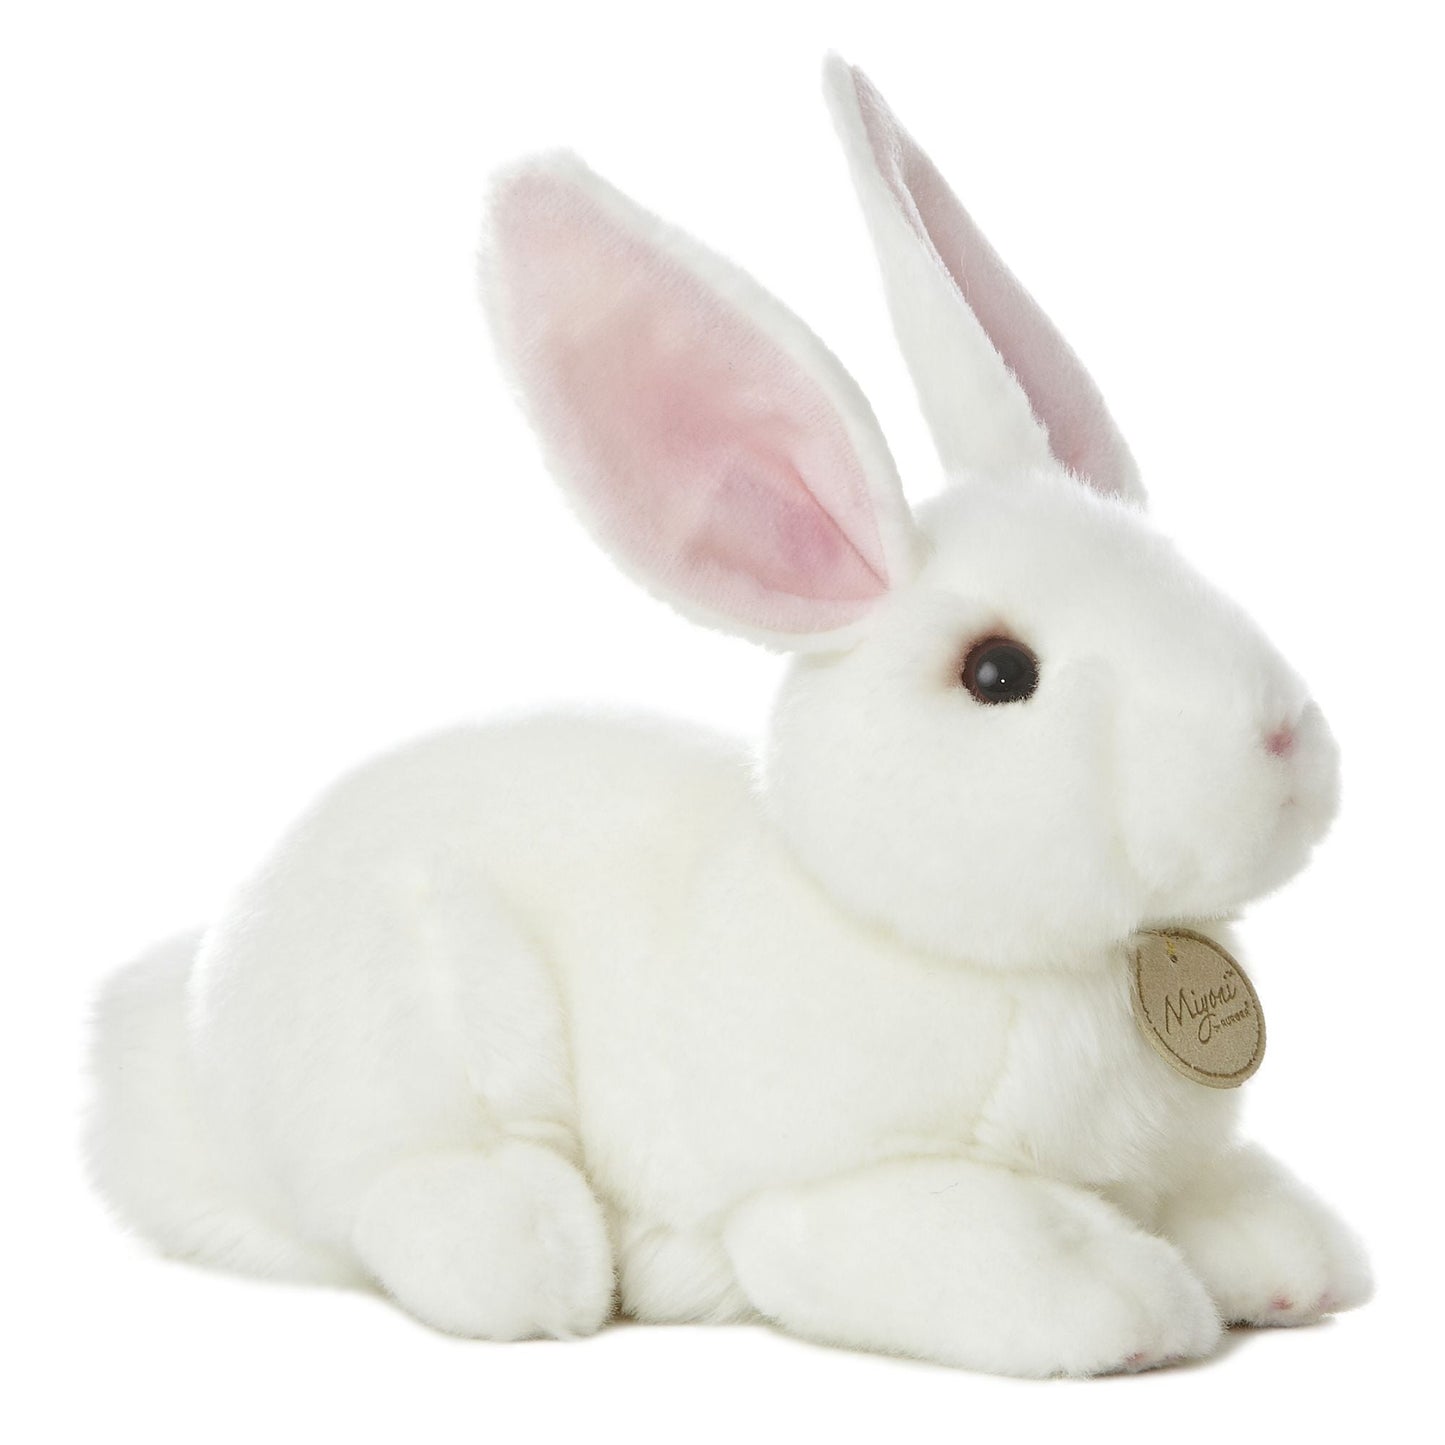 10" American White Rabbit